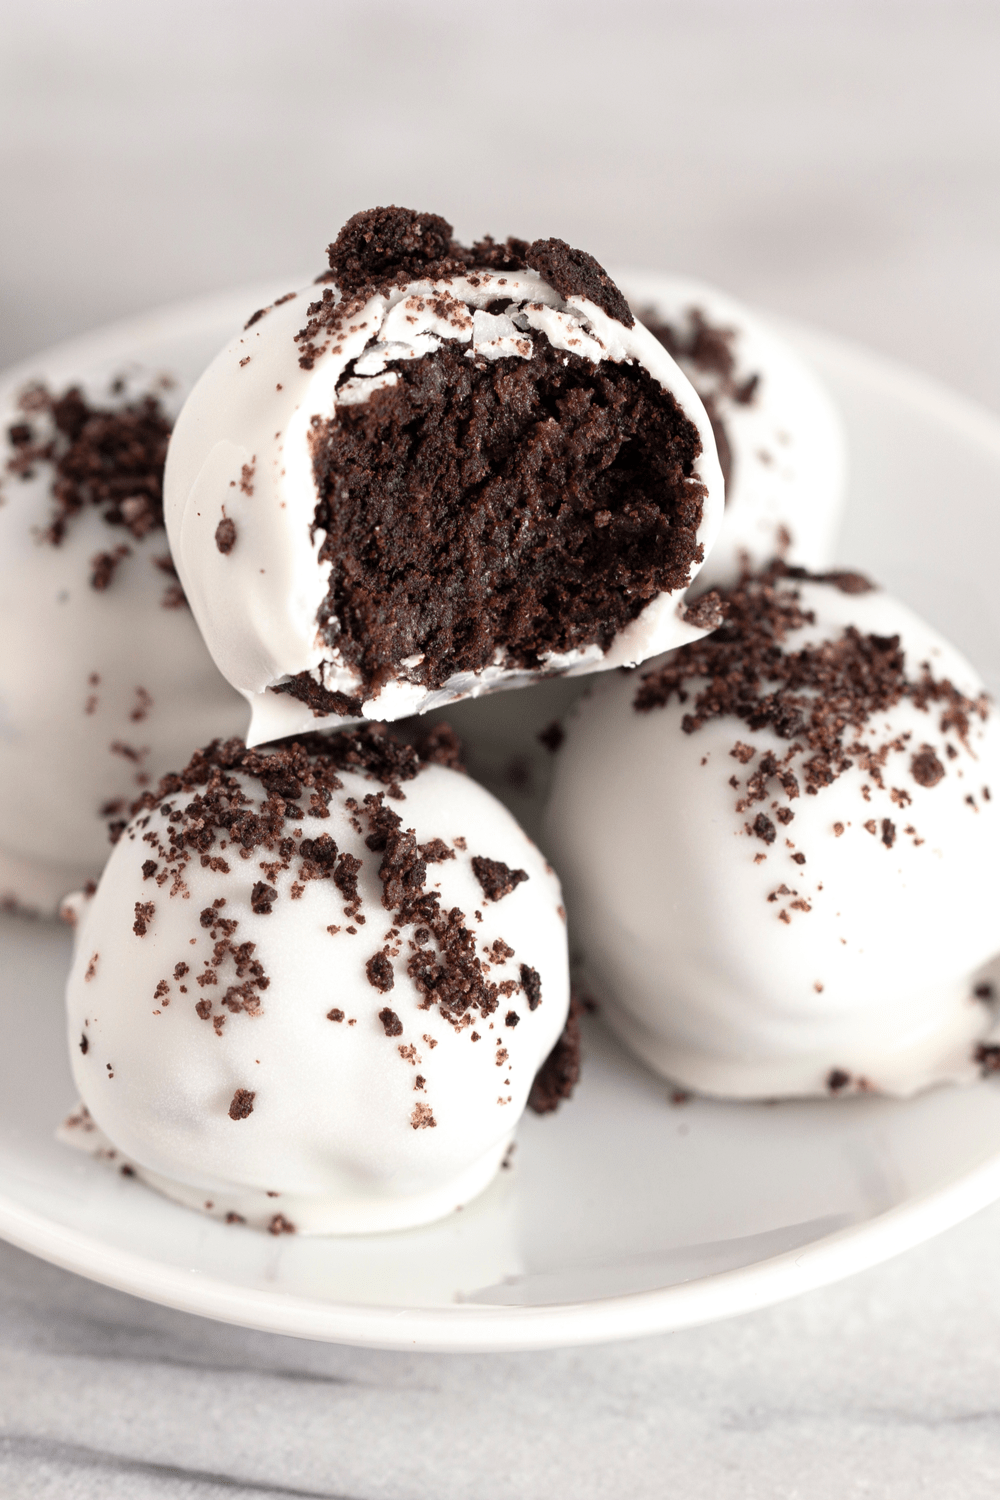 10 Best No-Bake Oreo Desserts - Insanely Good